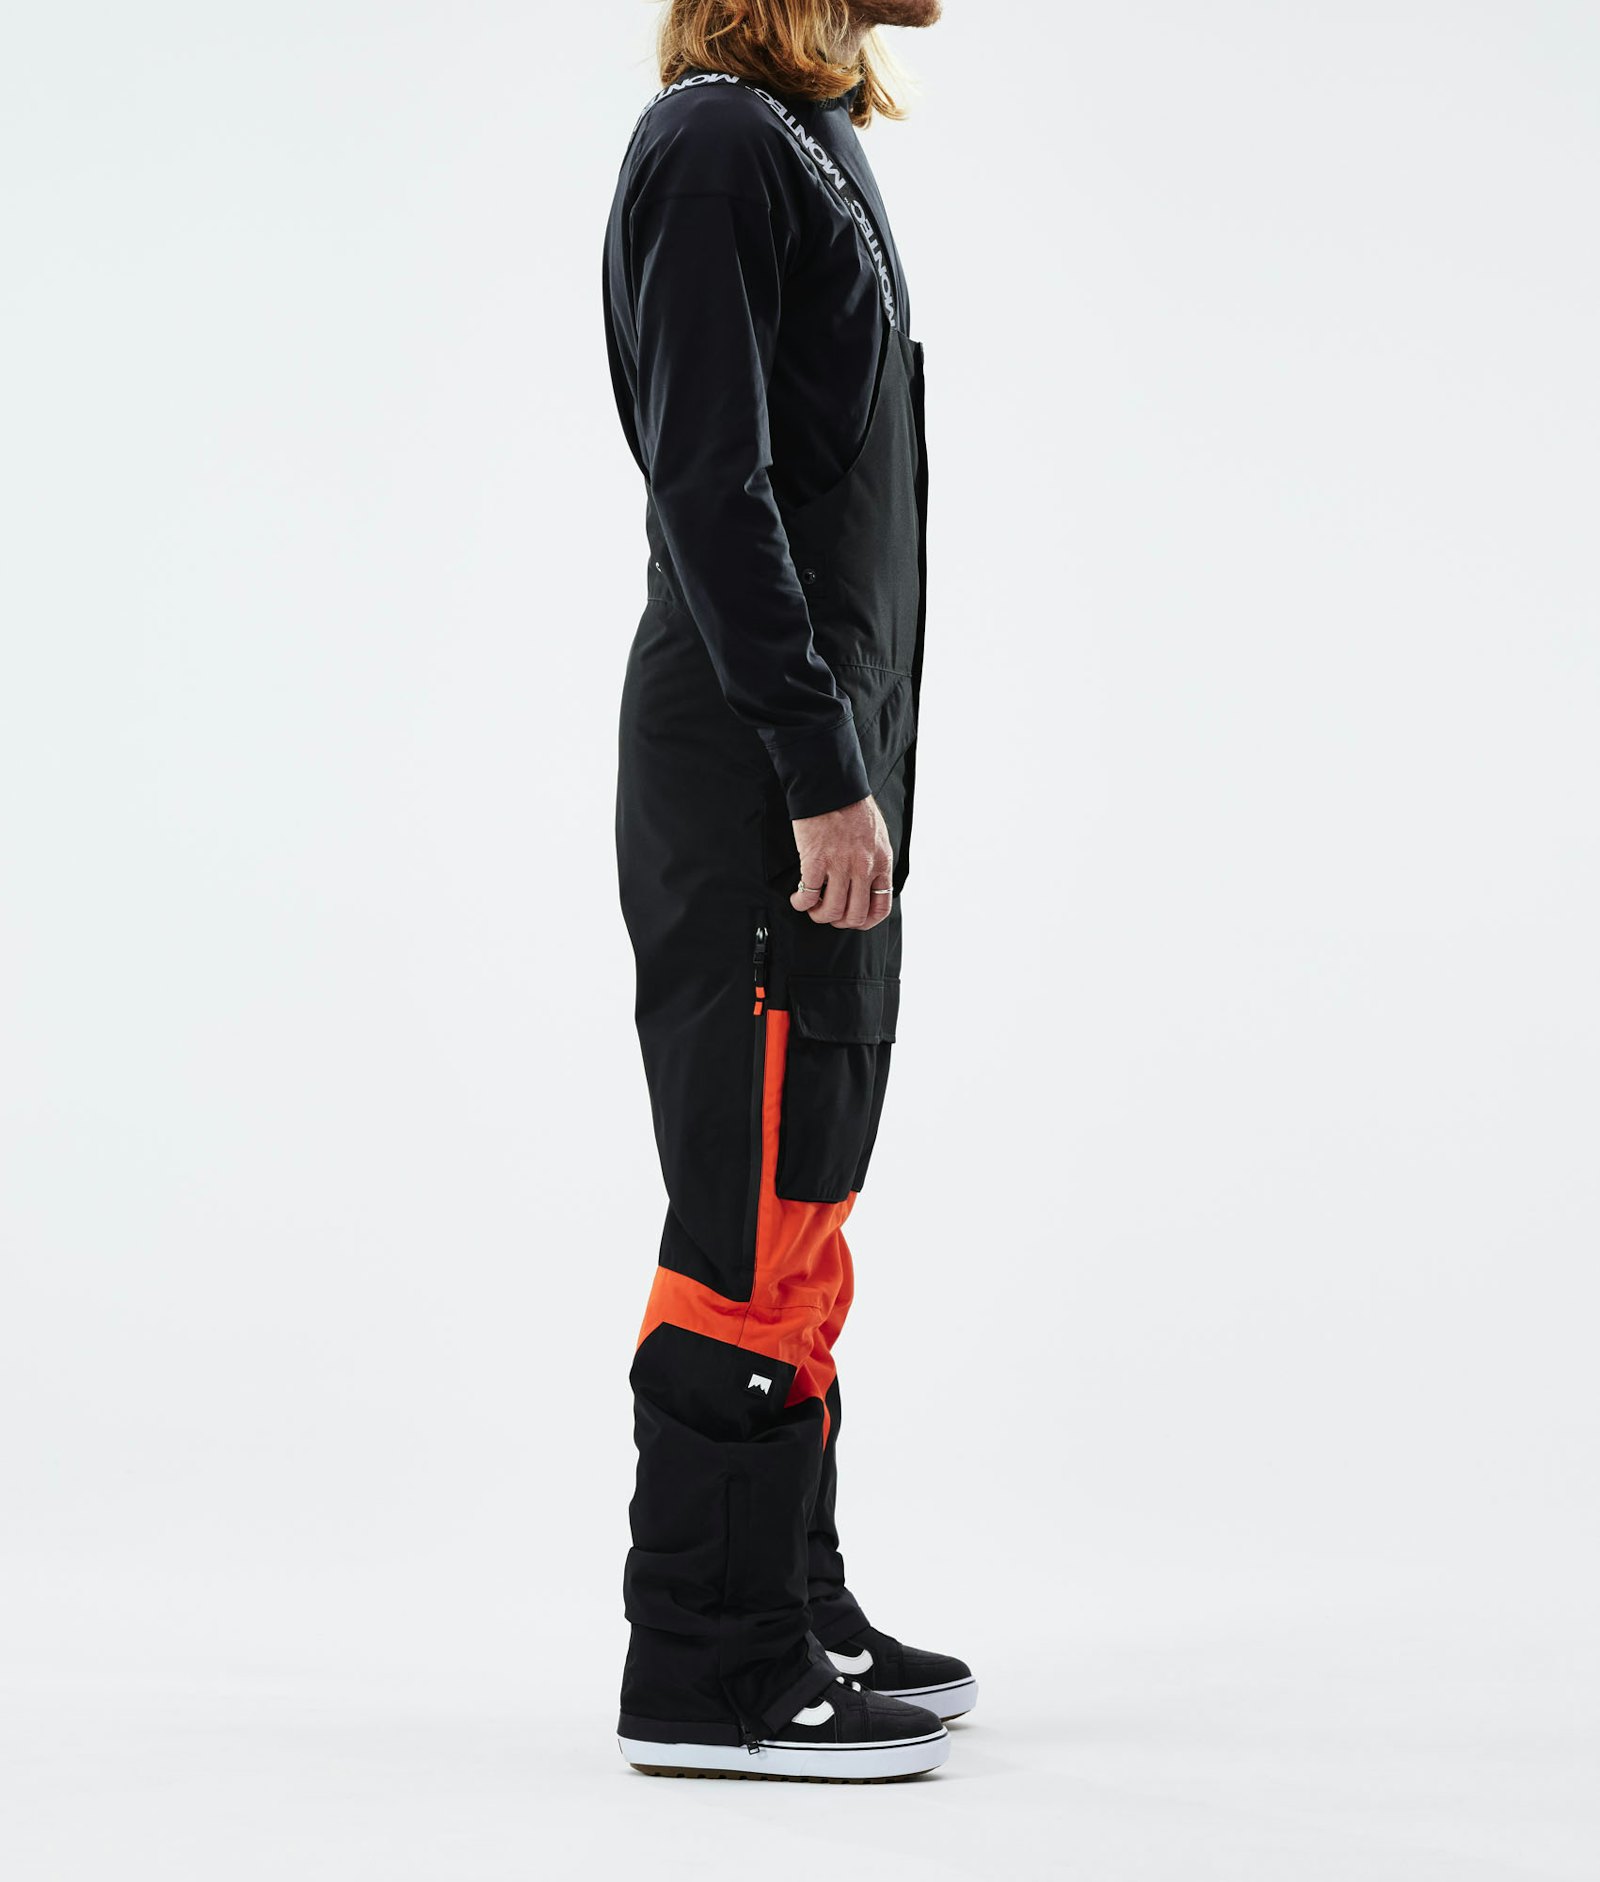 Fawk 2021 スノボ パンツ メンズ Black/Orange